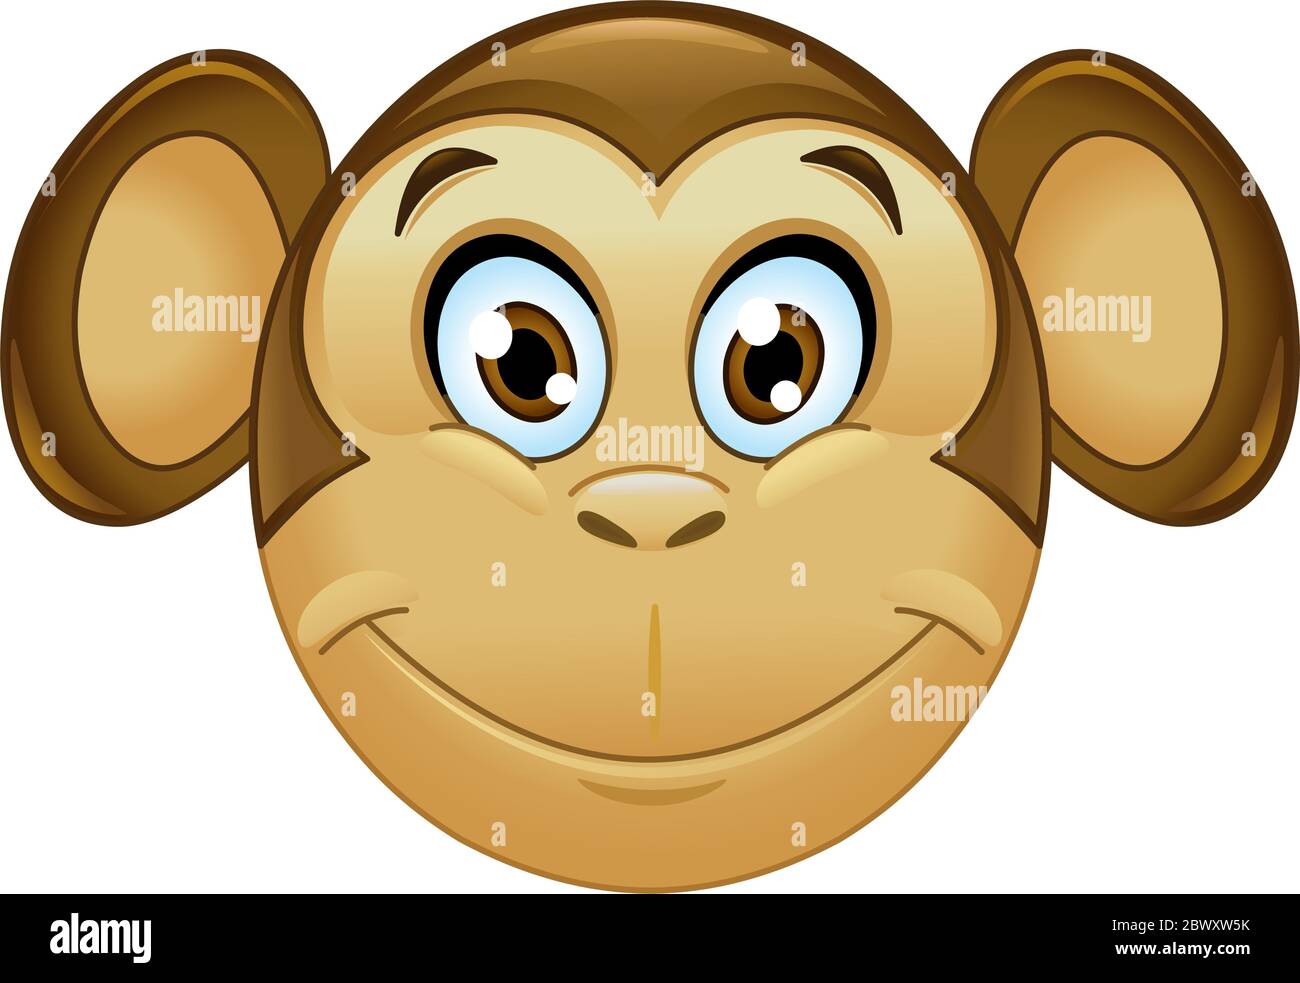 Smiling monkey face emoticon Stock Vector